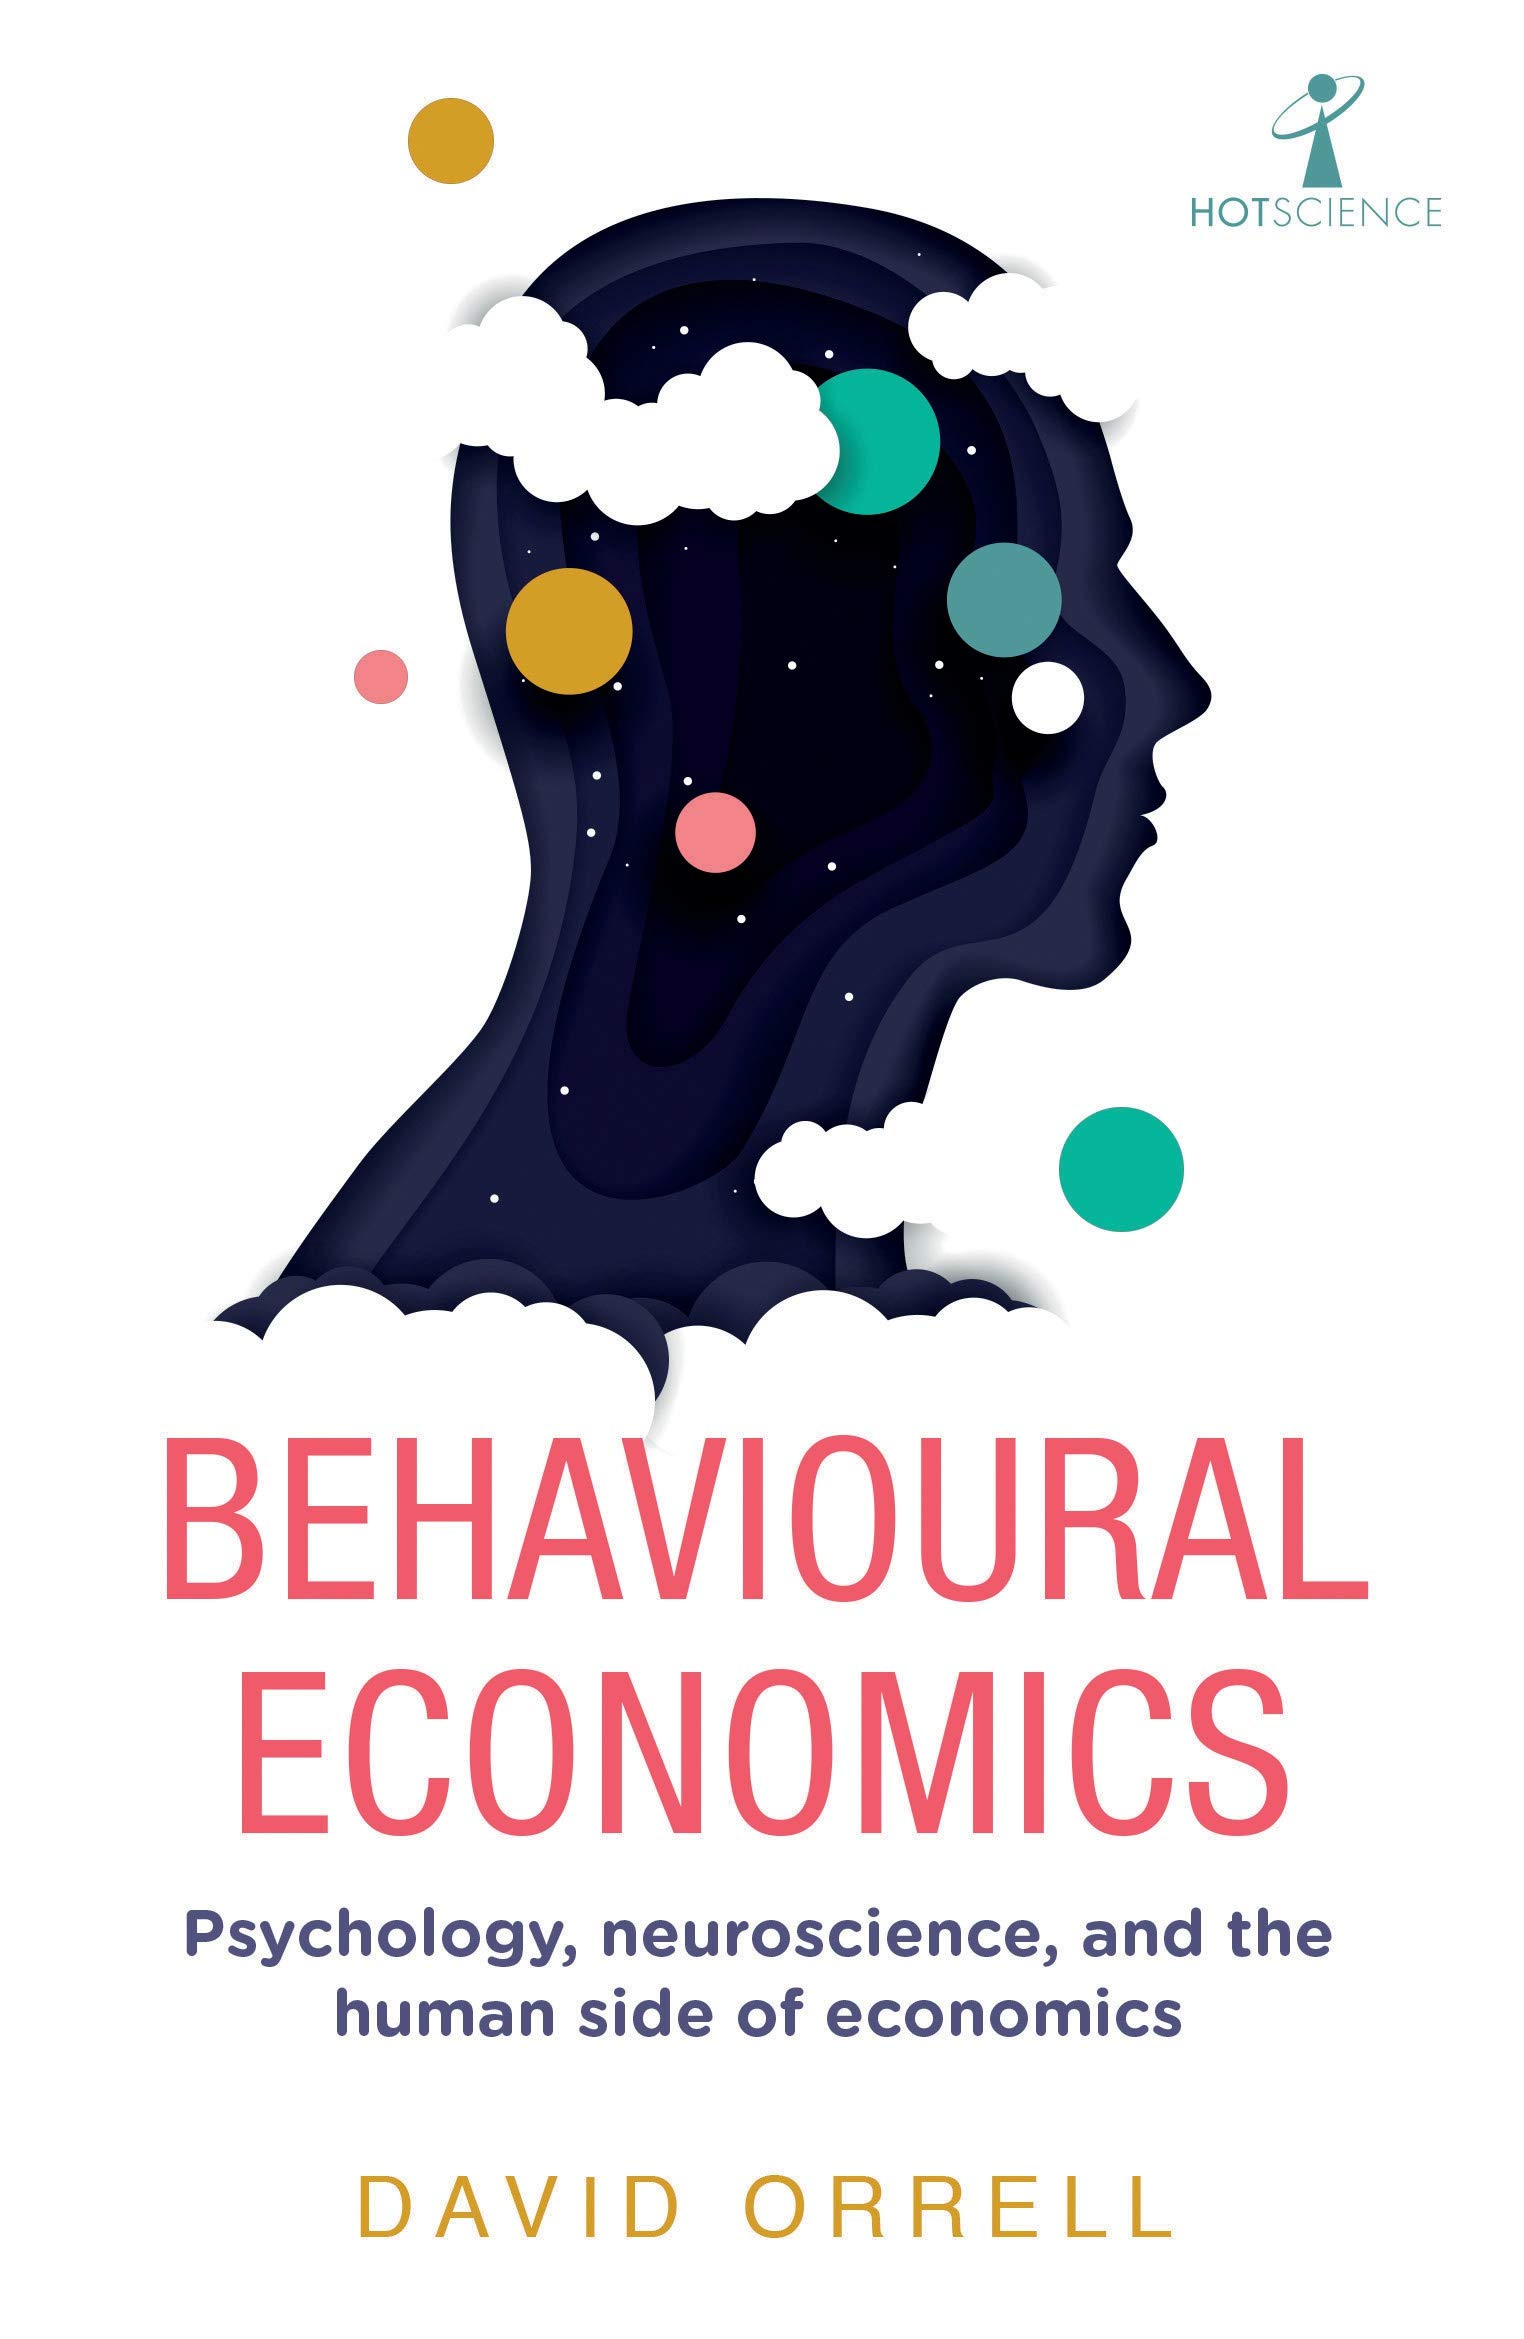 thesis in behavioural economics